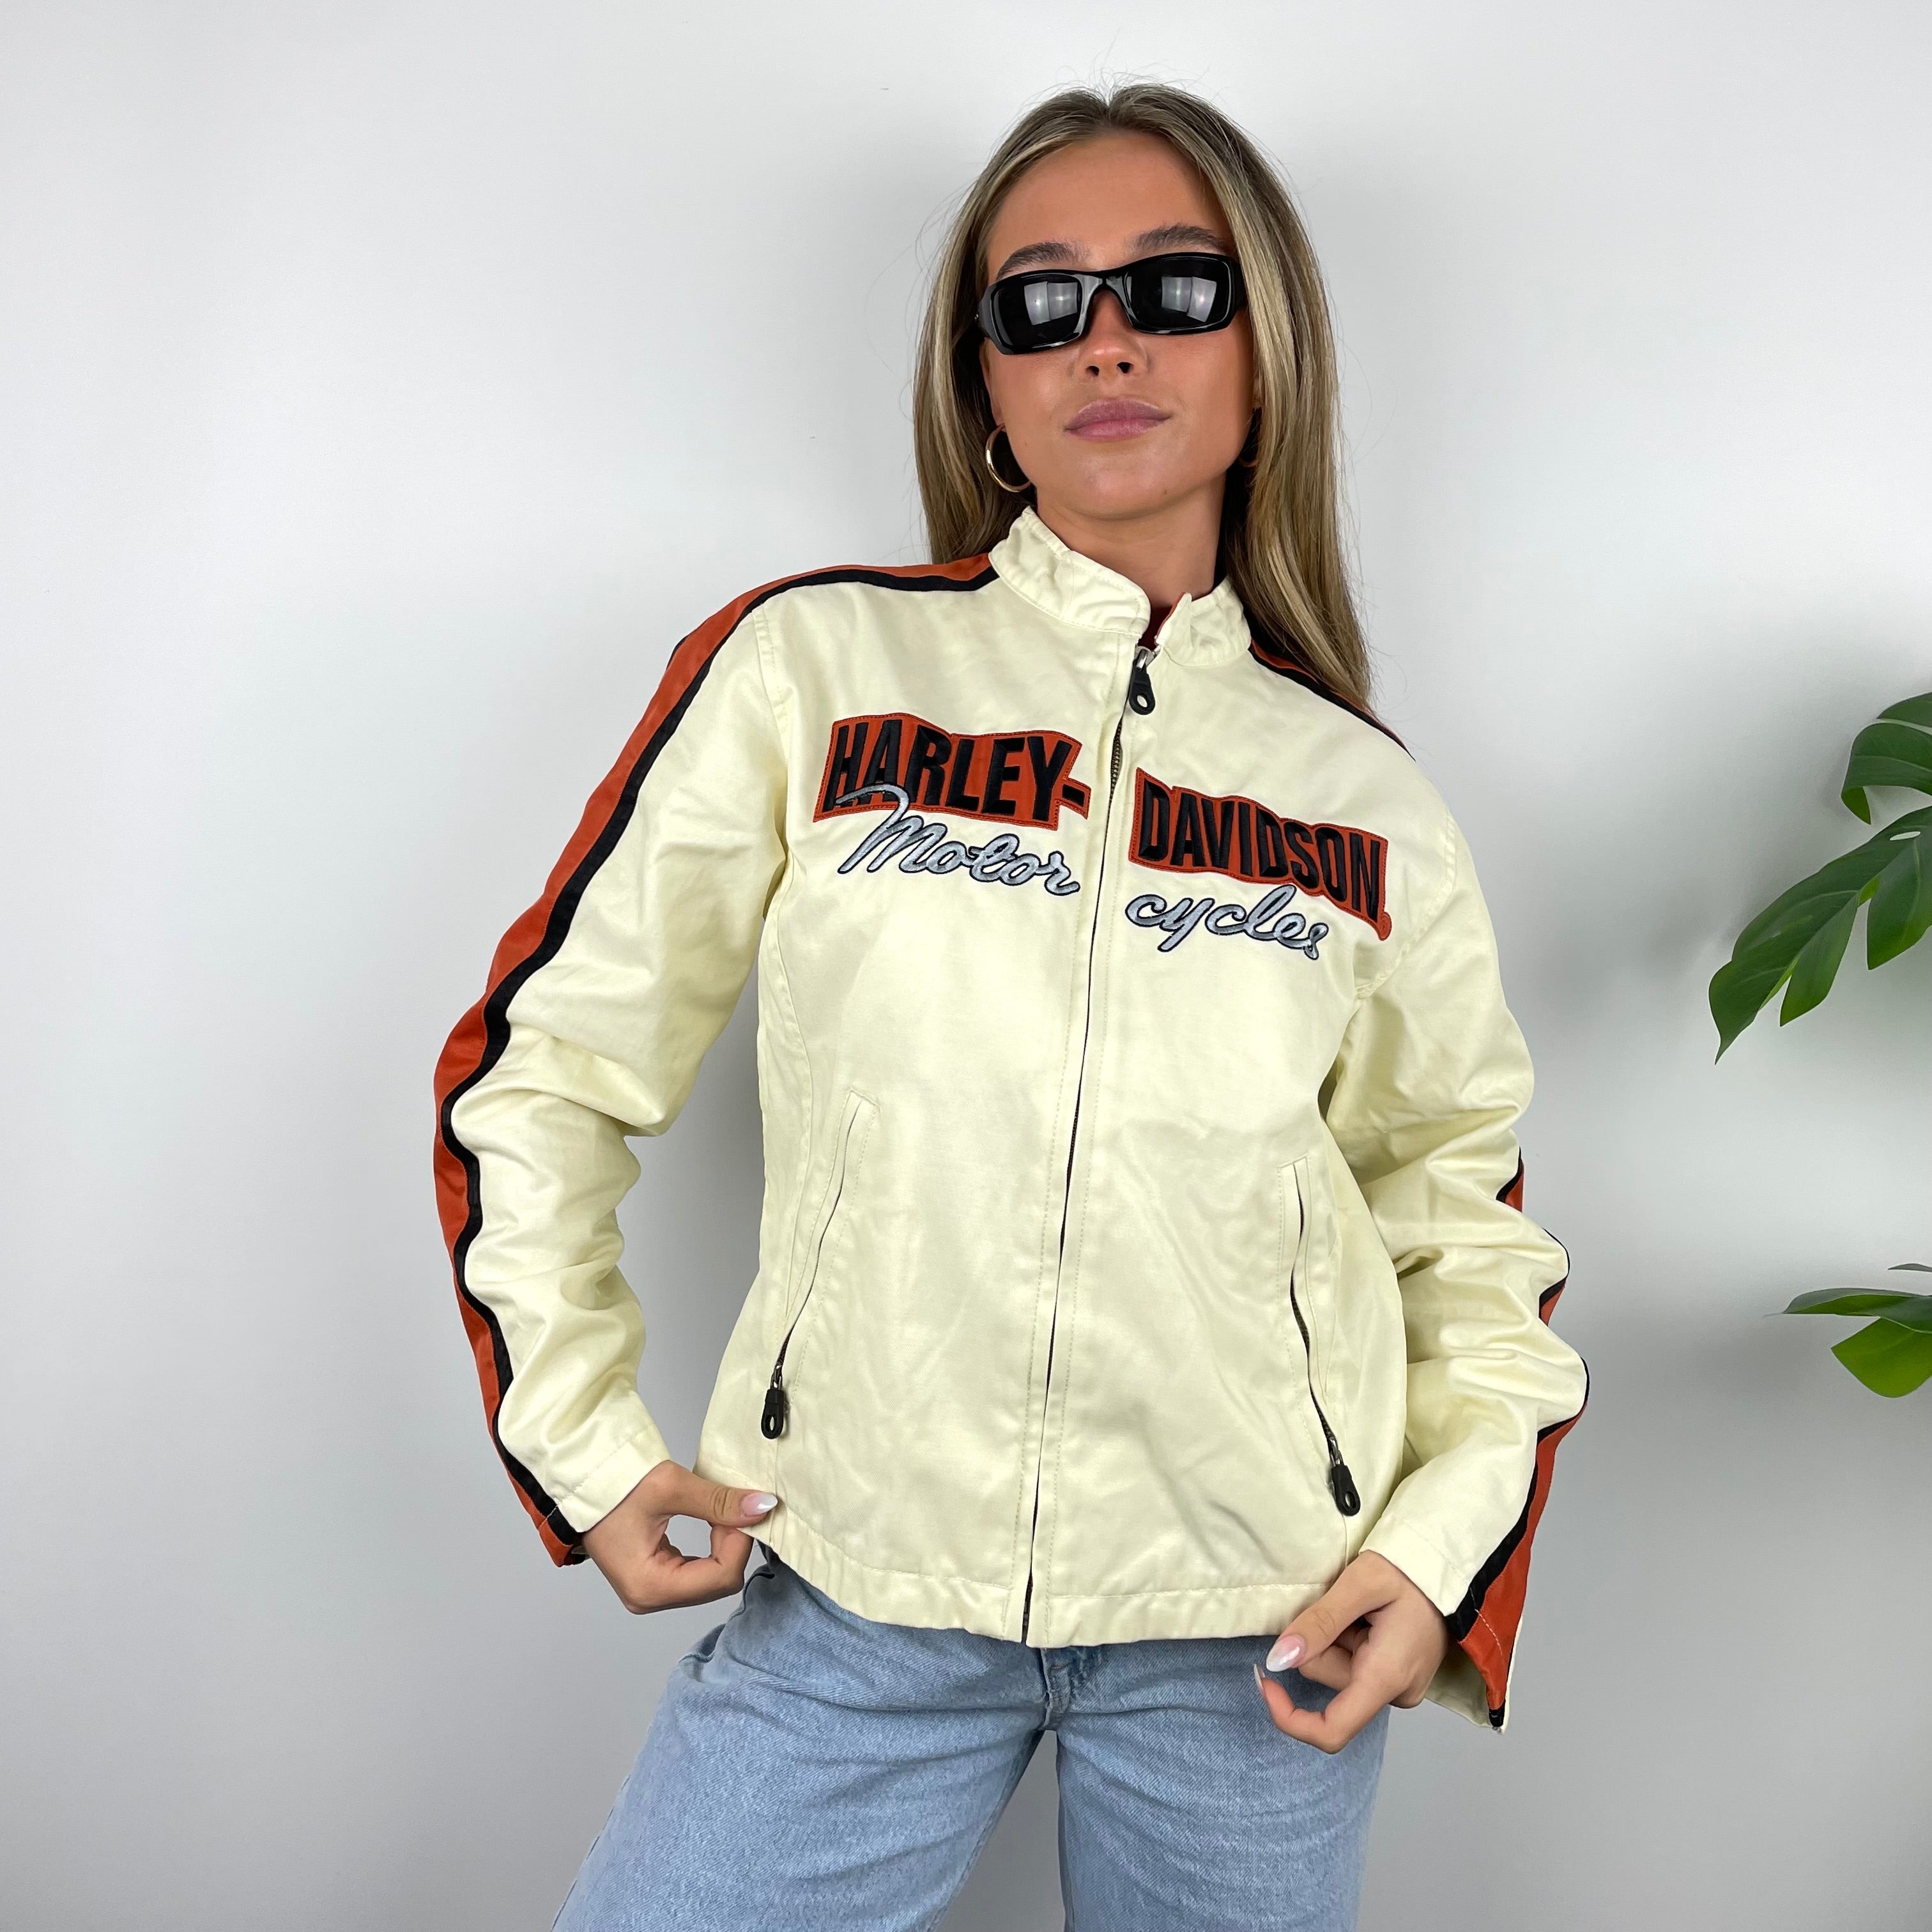 Harley Davidson Jacket as worn by Madison Beer (S)